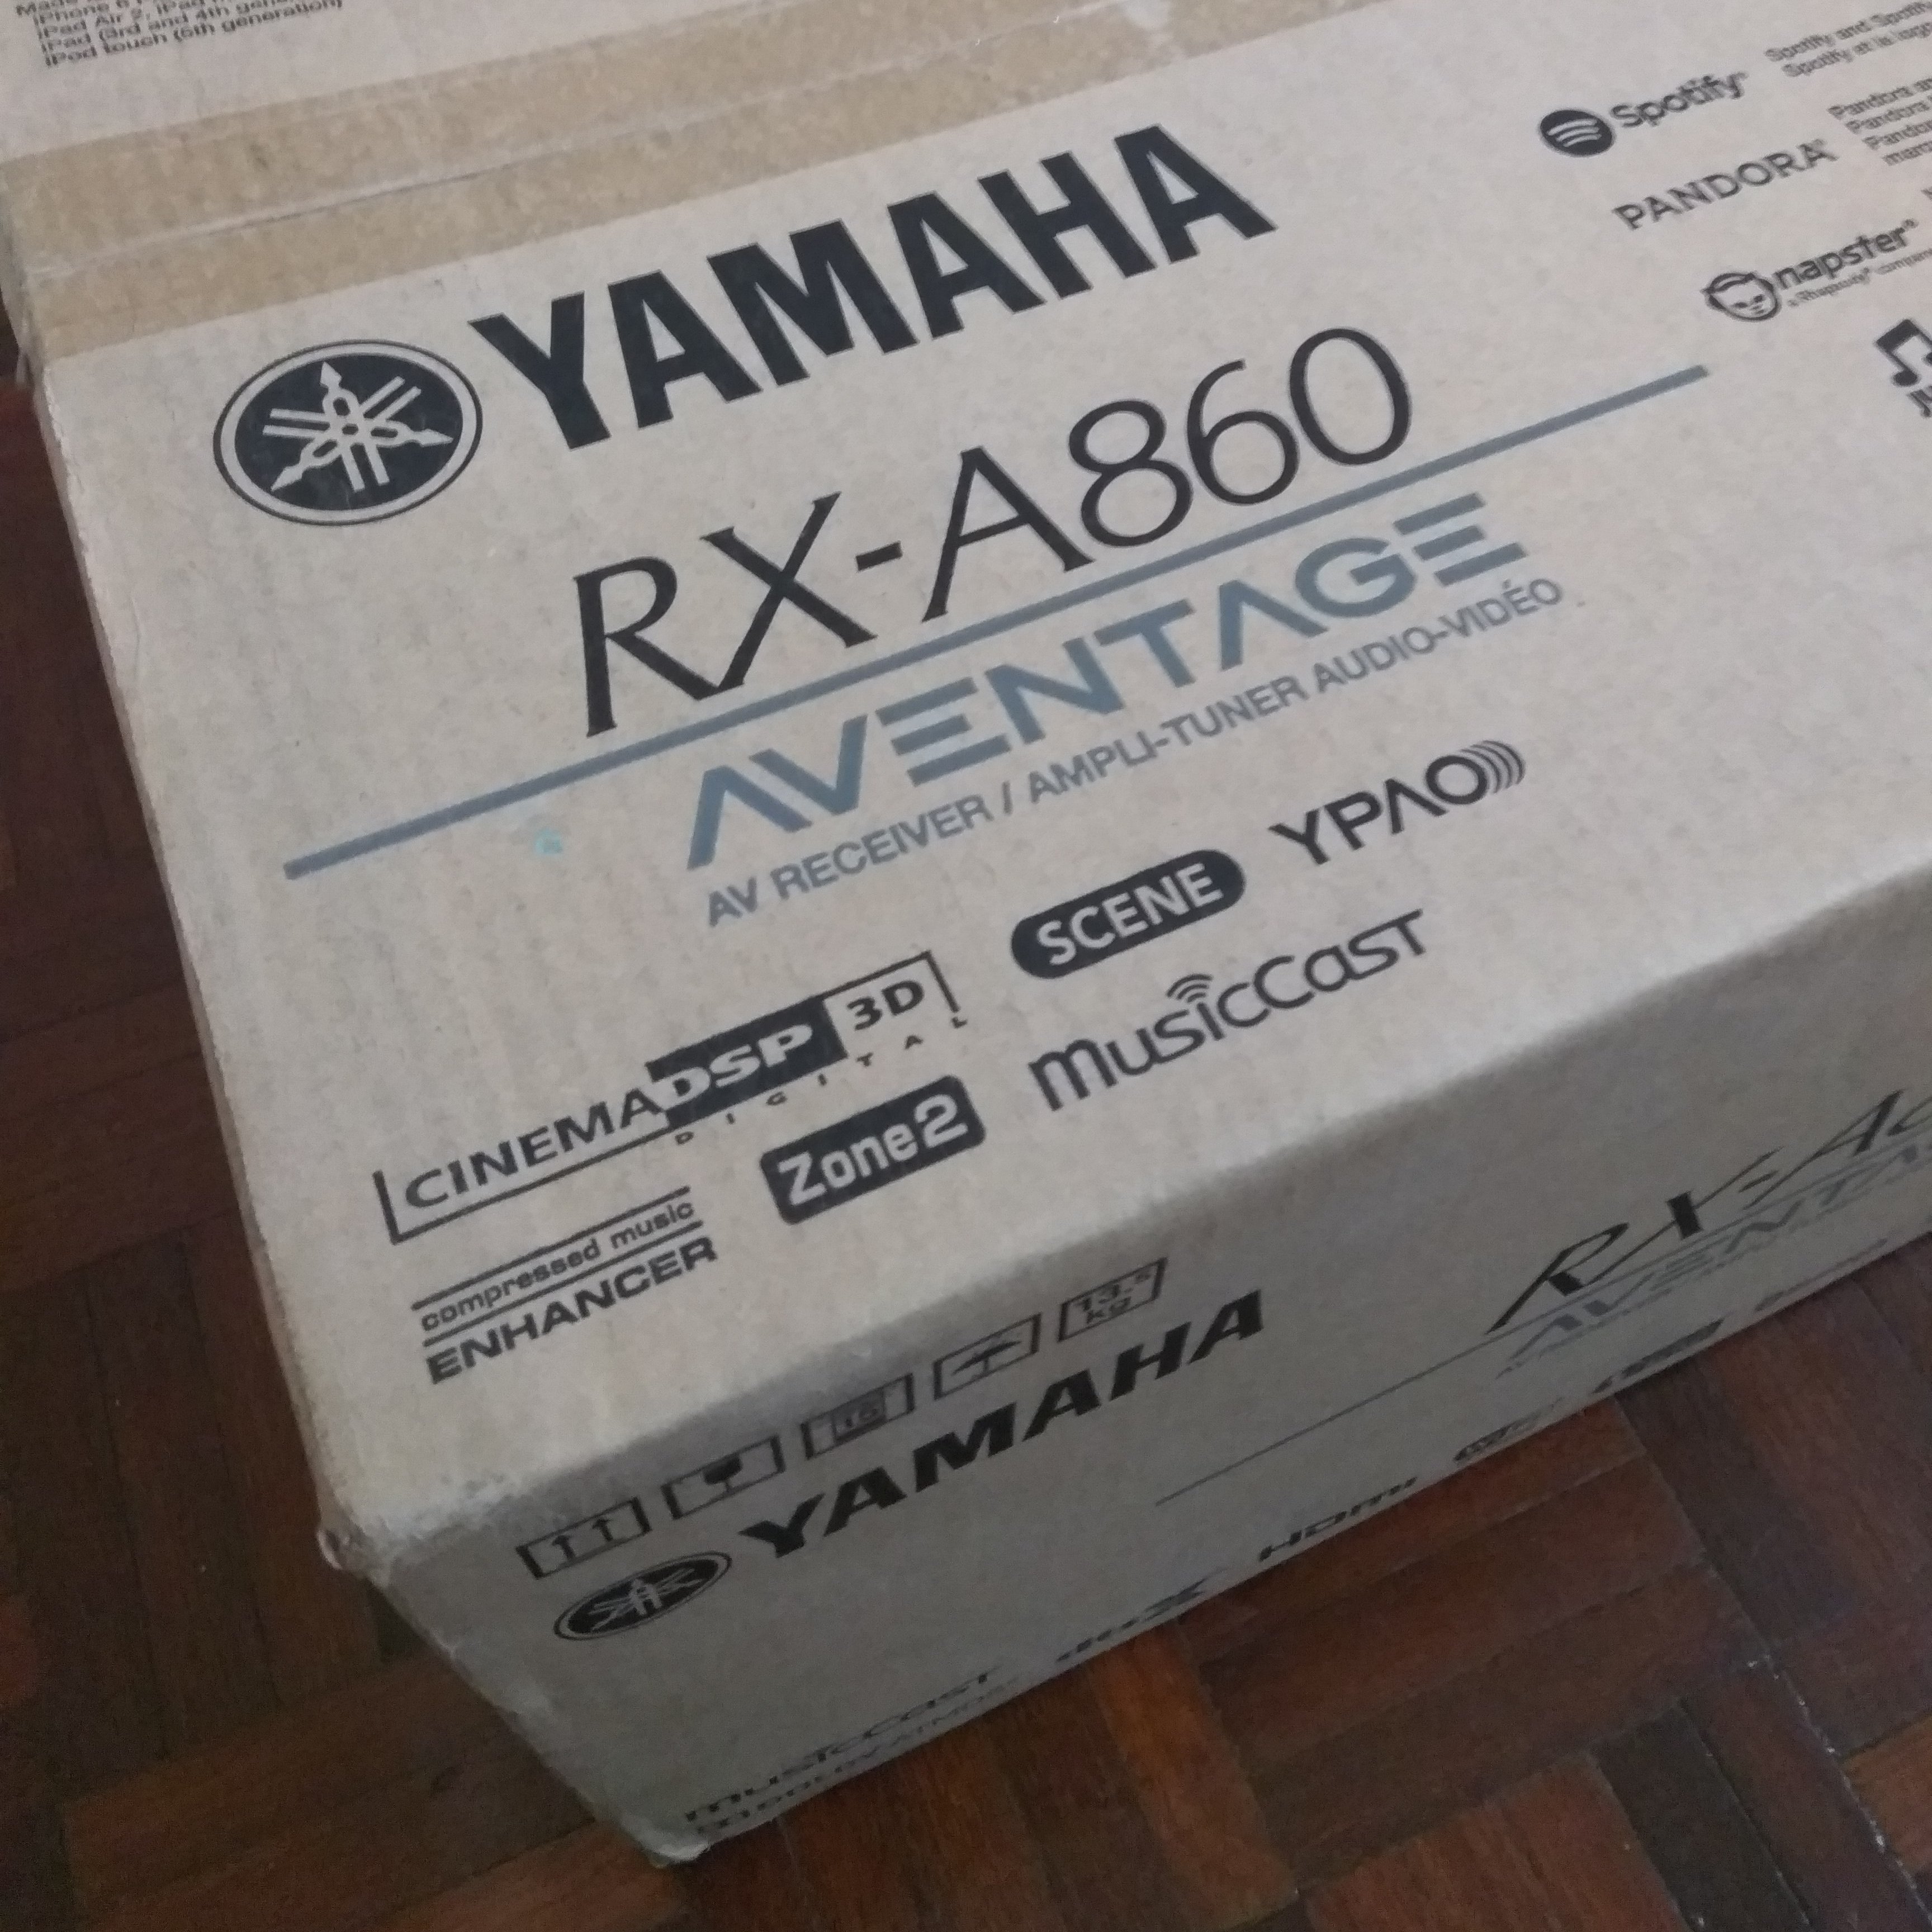 Yamaha RX-A860 is fun